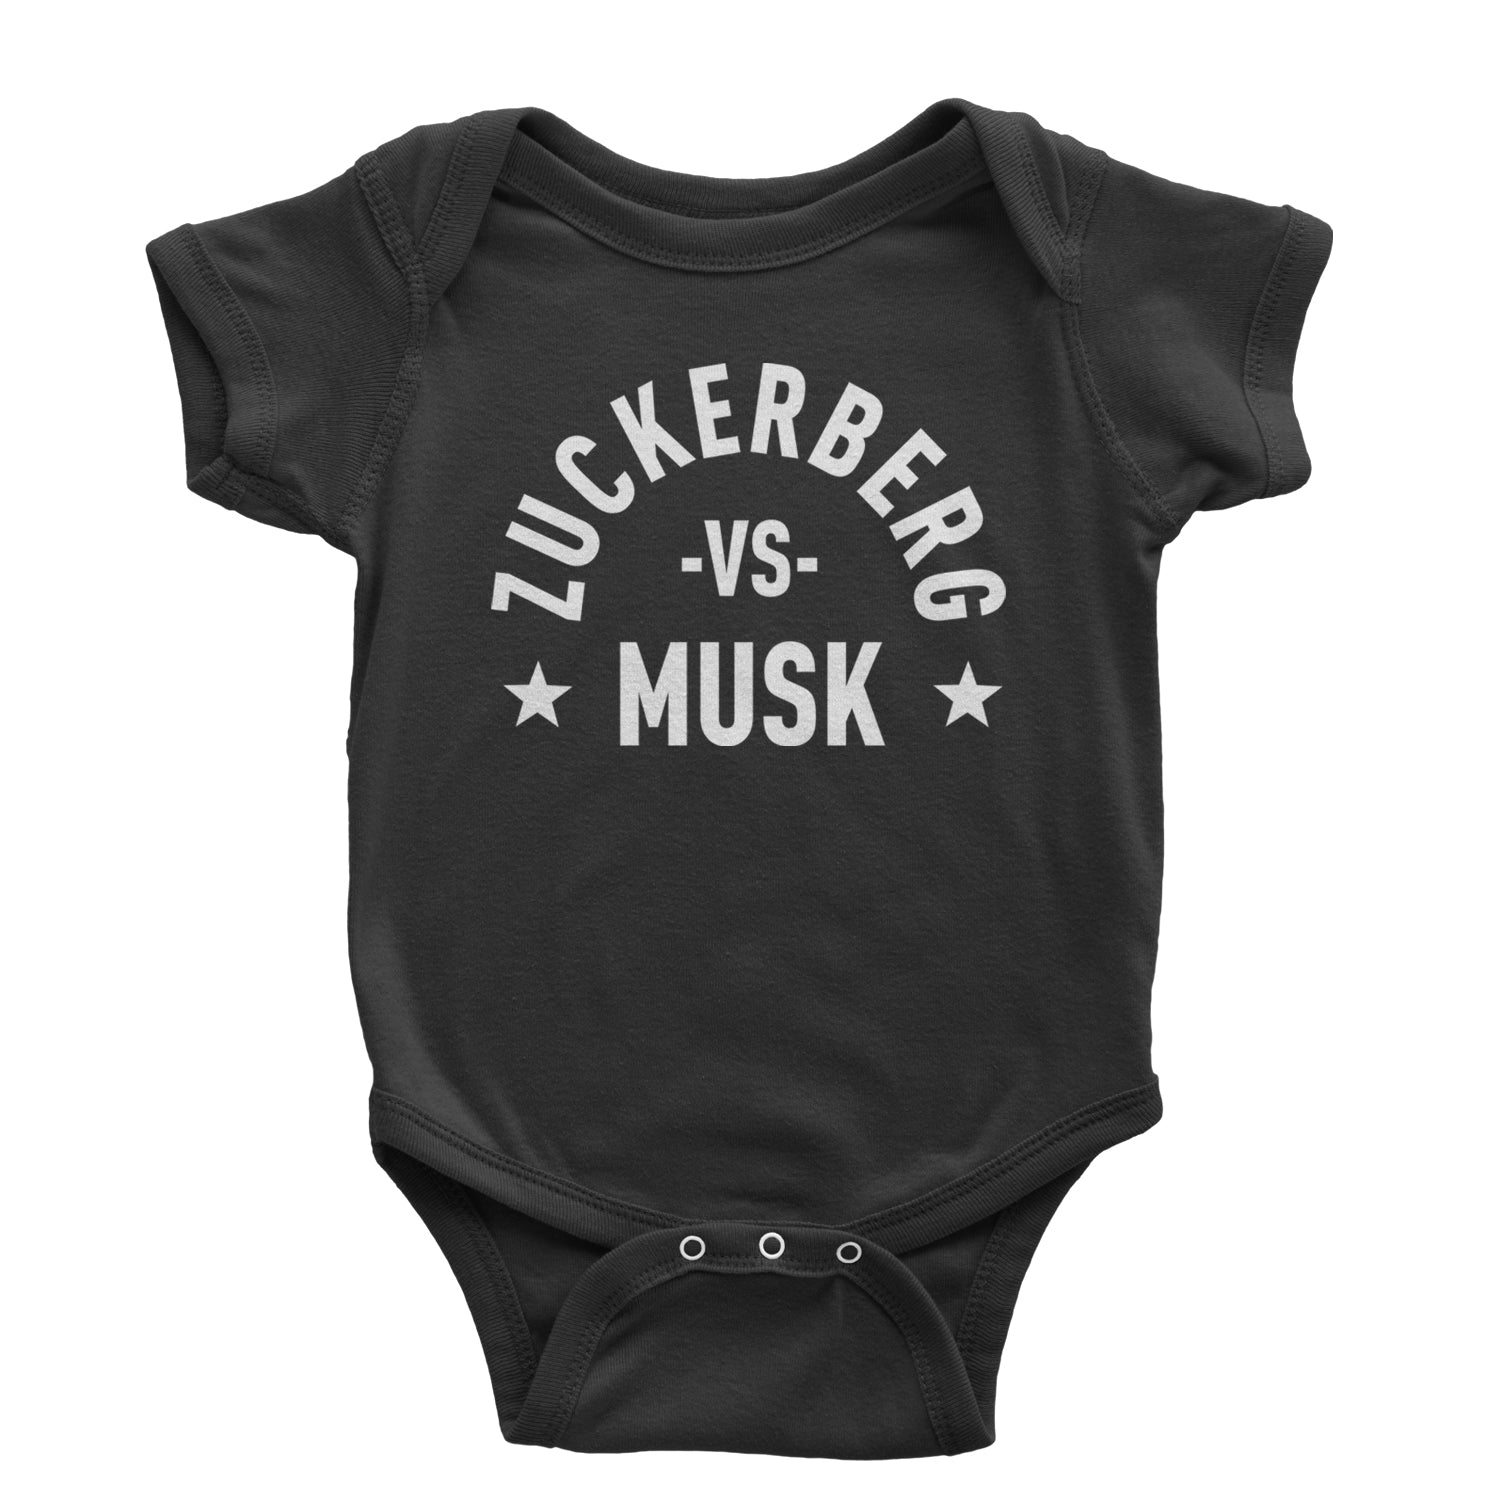 Zuckerberg Vs Musk Martial Arts Fight Showdown Infant One-Piece Romper Bodysuit and Toddler T-shirt